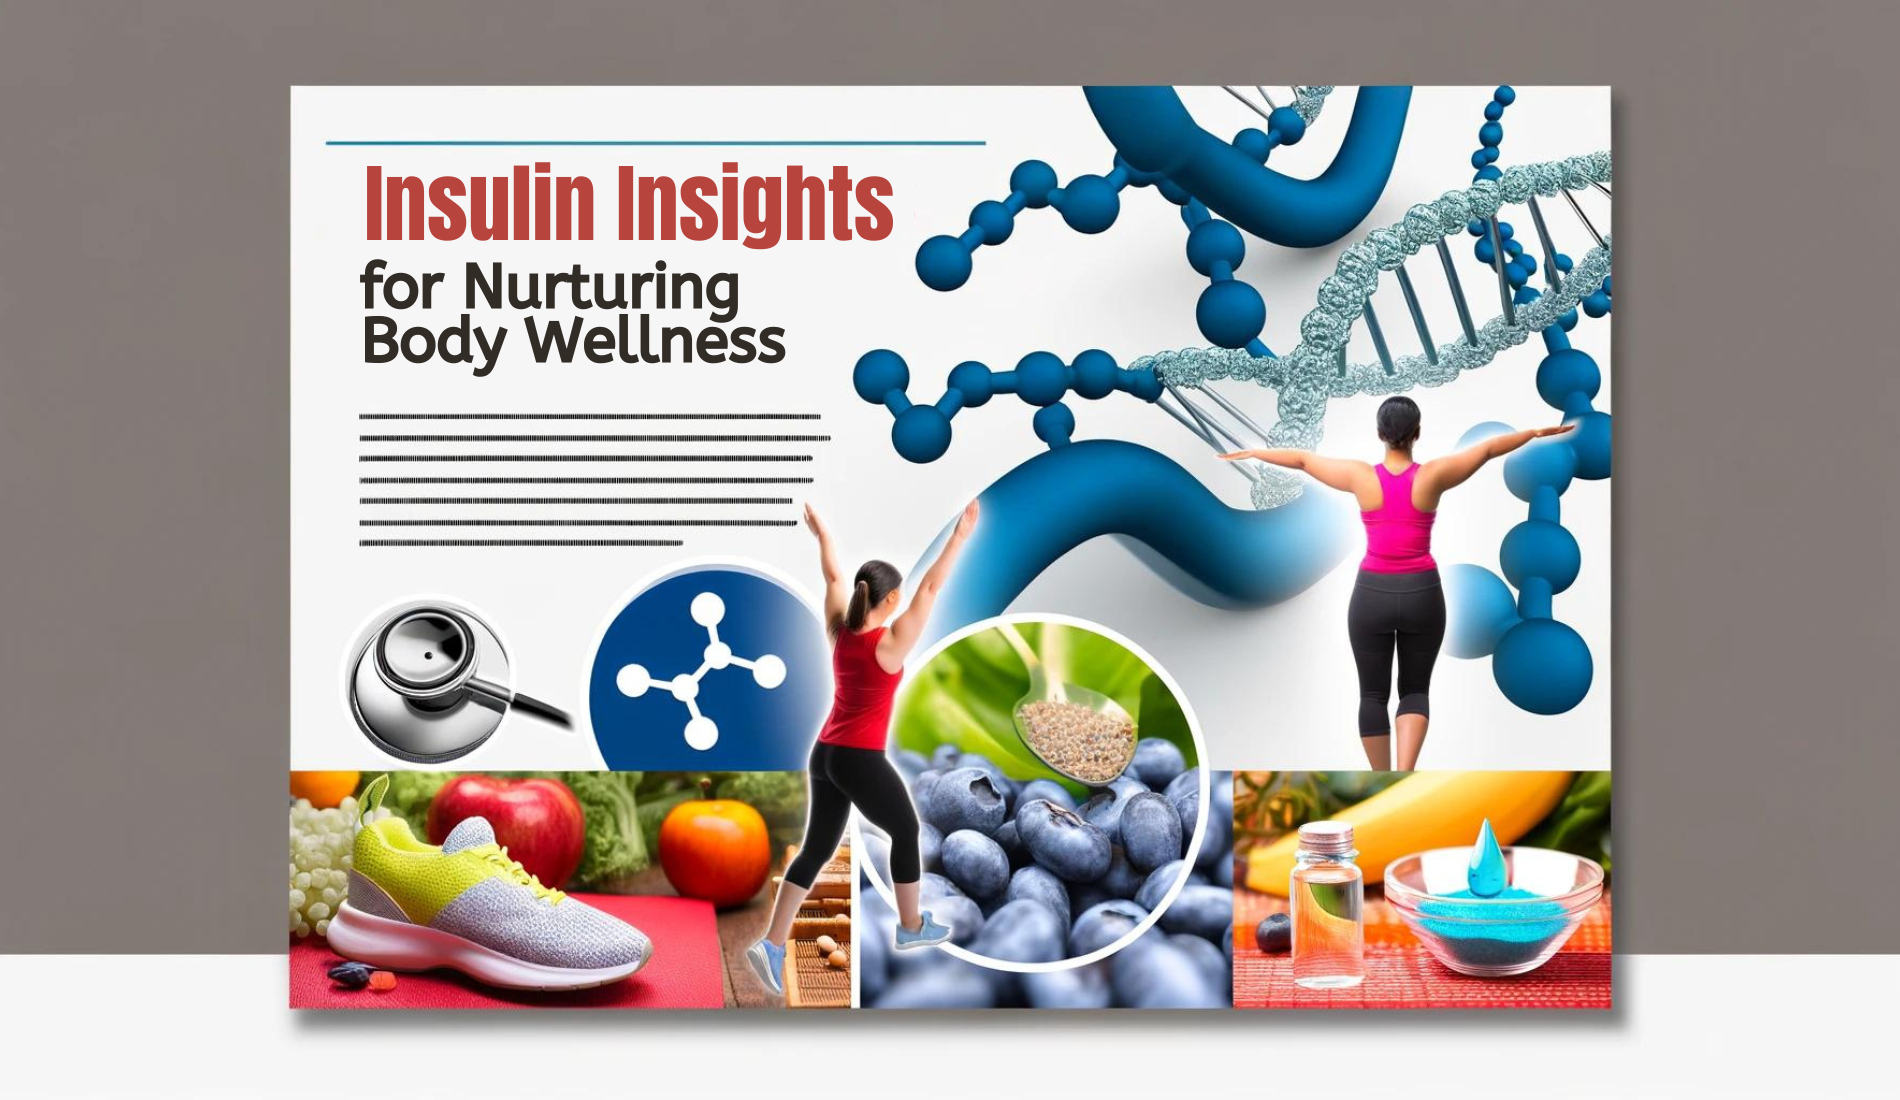 Insulin Insights for Nurturing Body Wellness